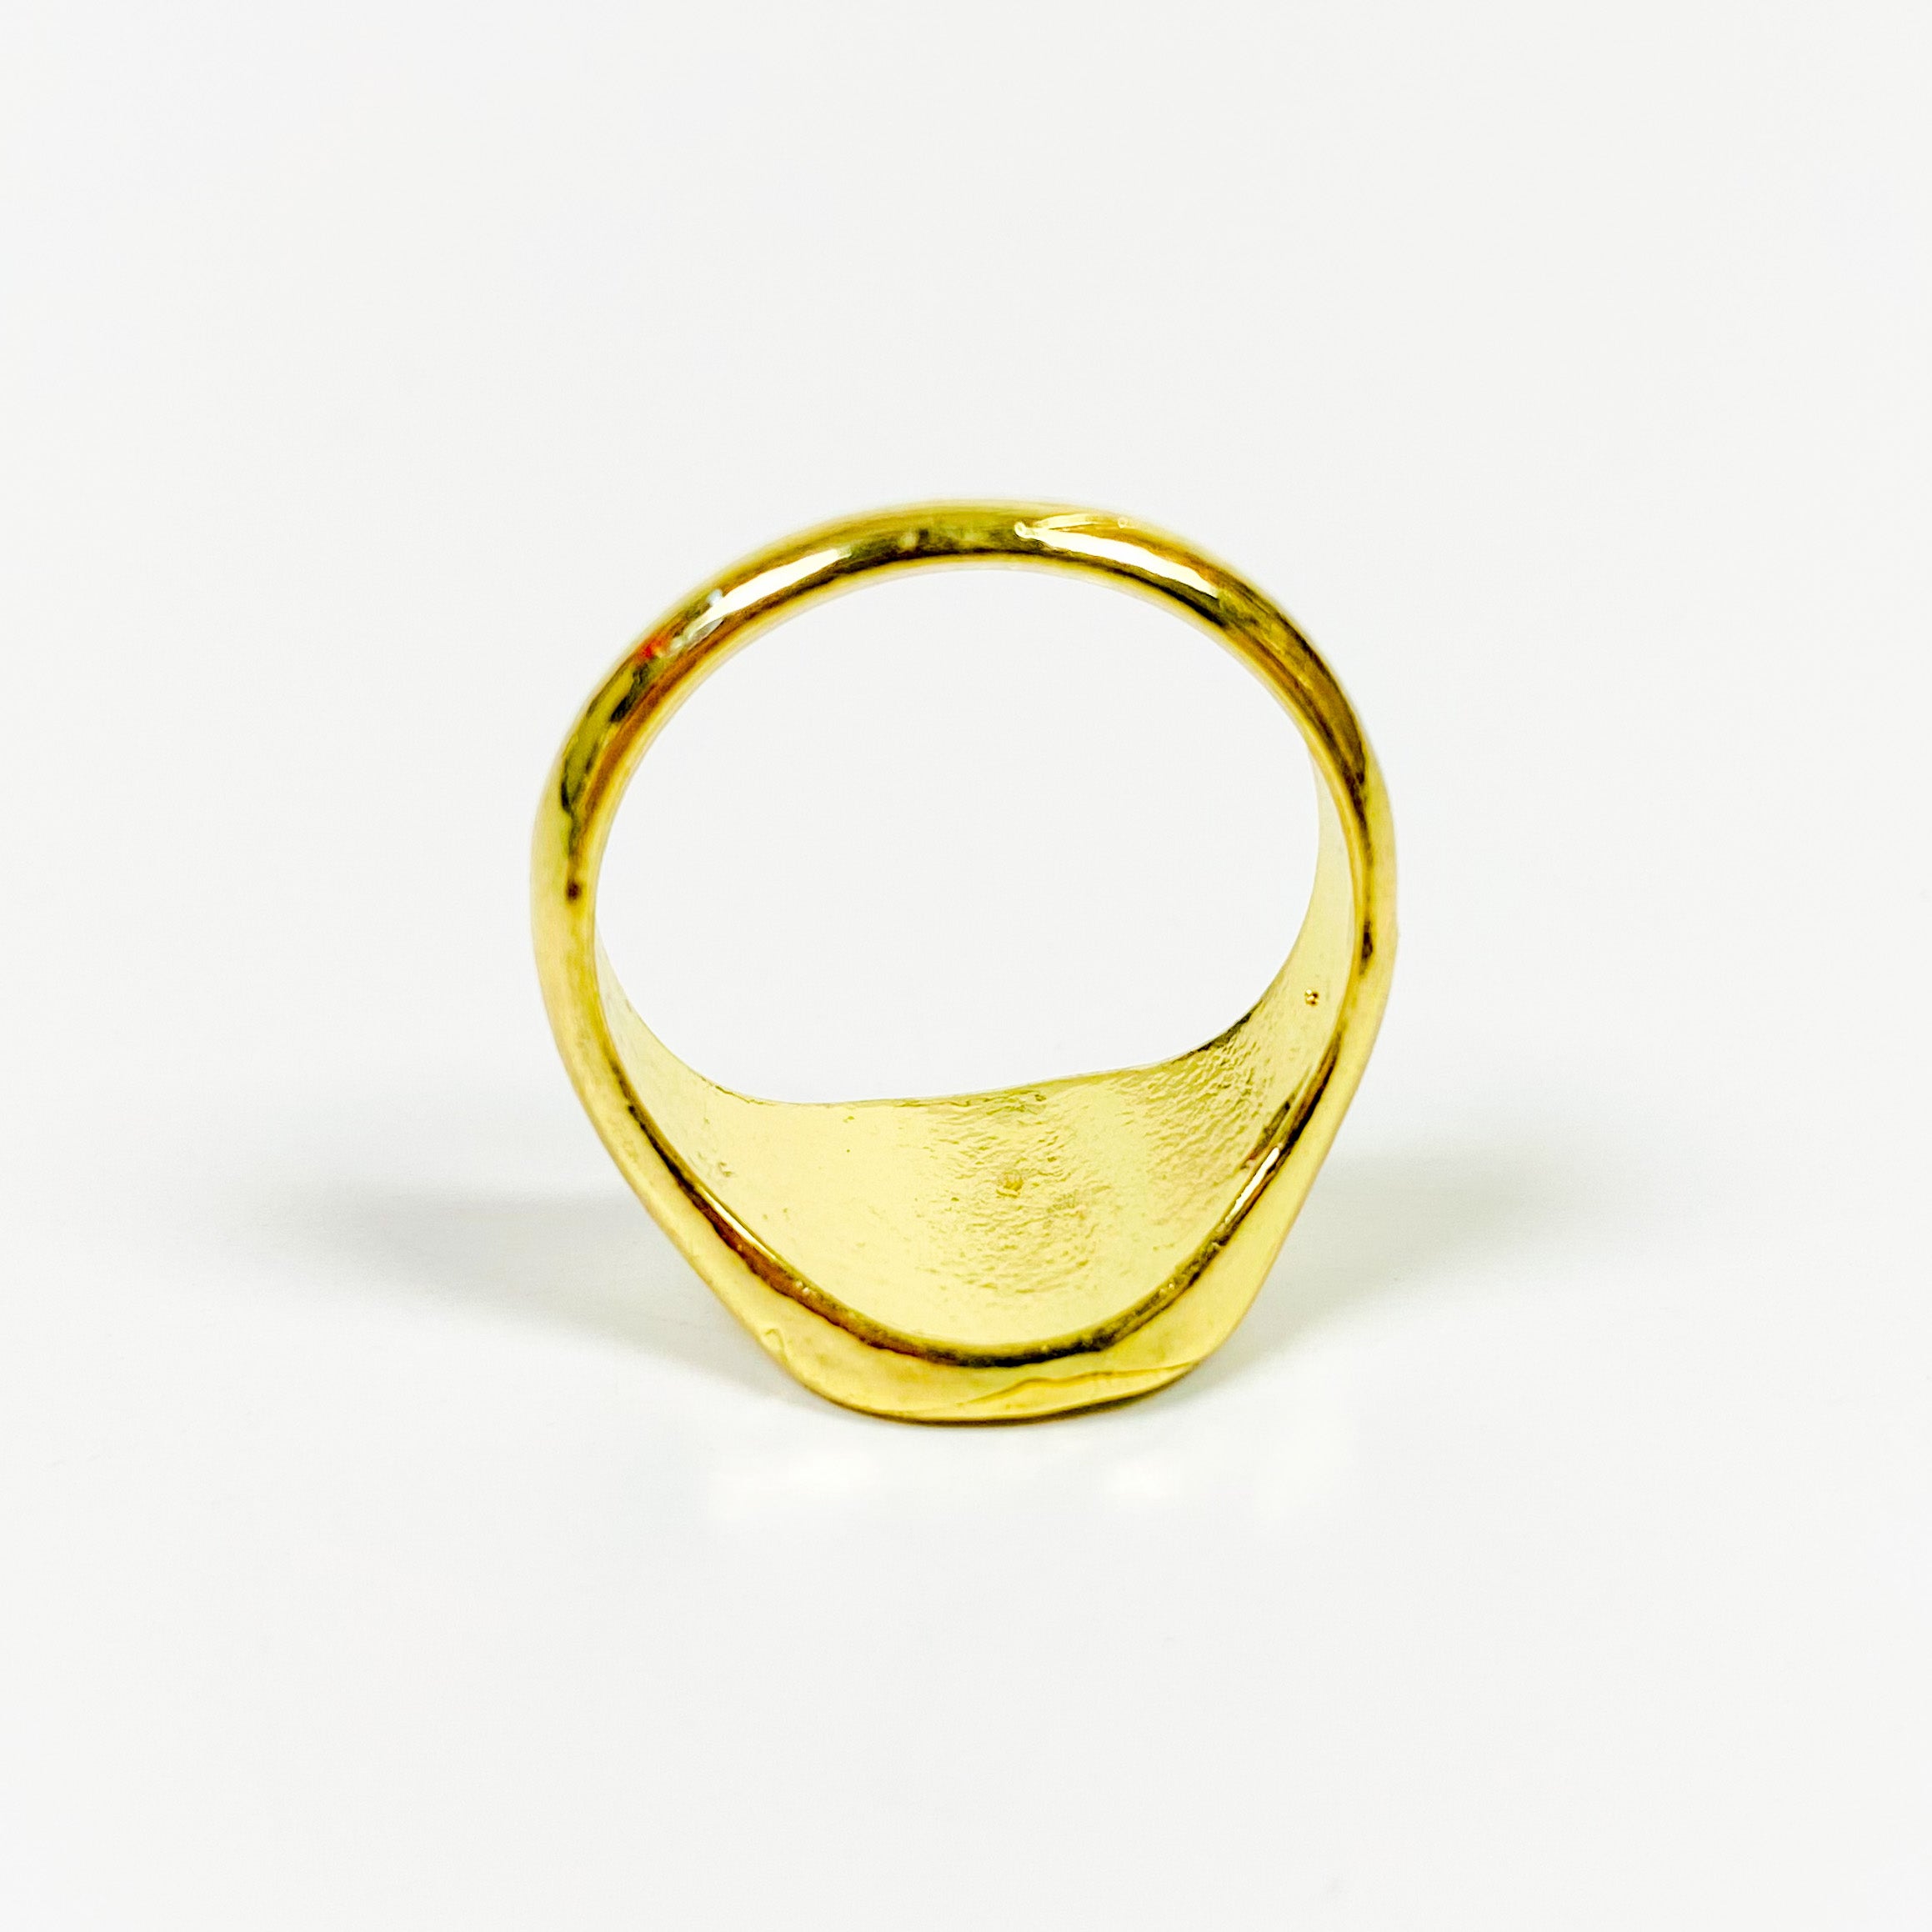 Vintage Block Signet Ring Gold Green